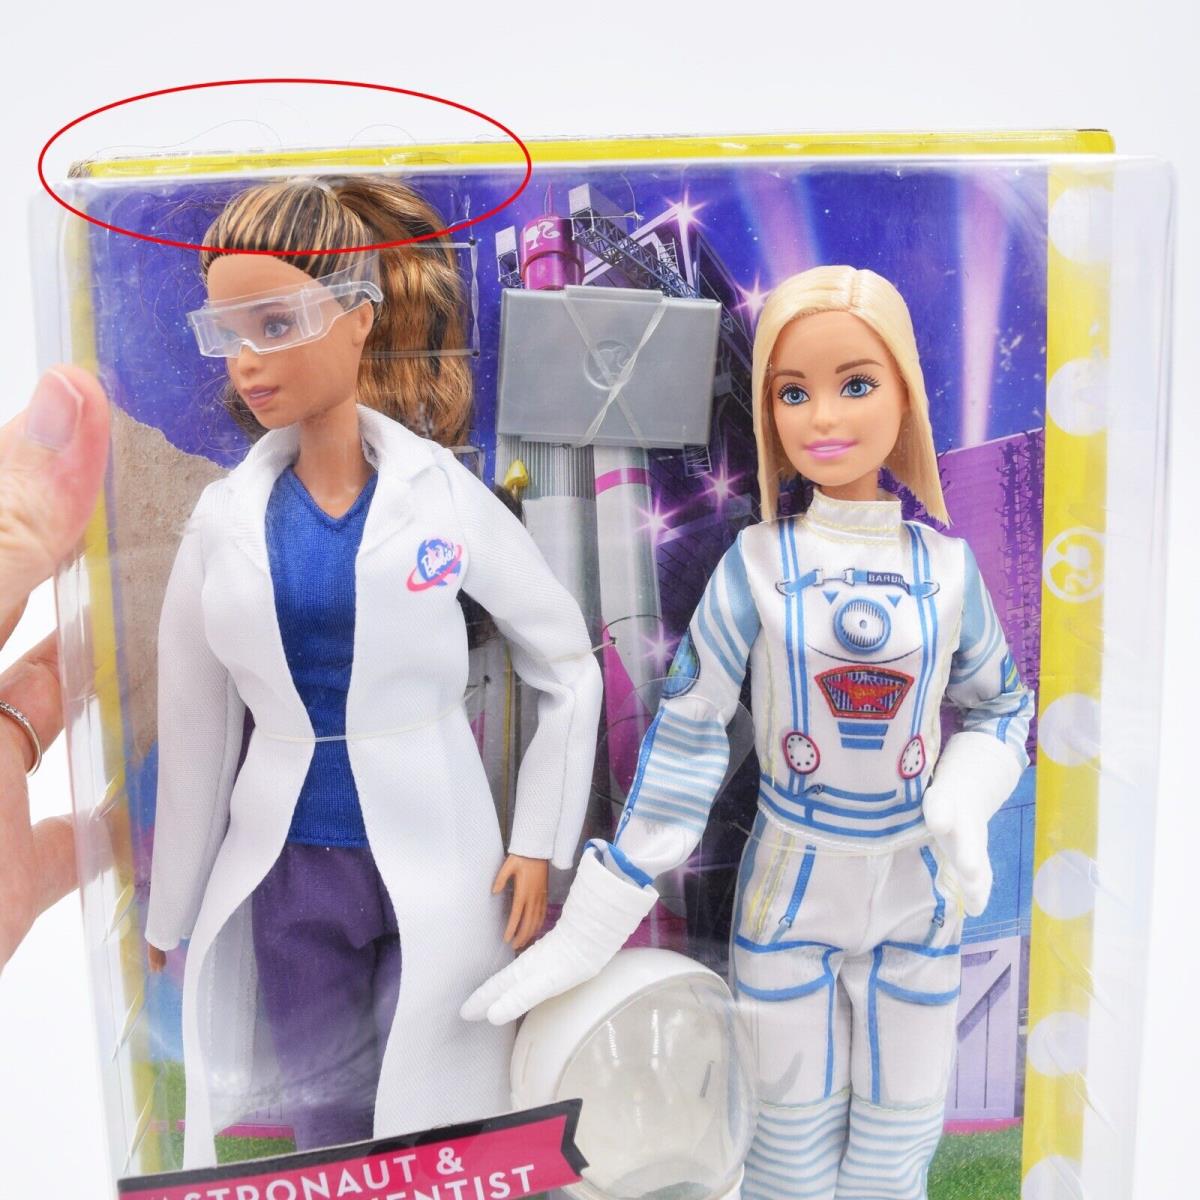 2016 Mattel Barbie Astronaut Space Scientist Doll Set Packaging FCP65